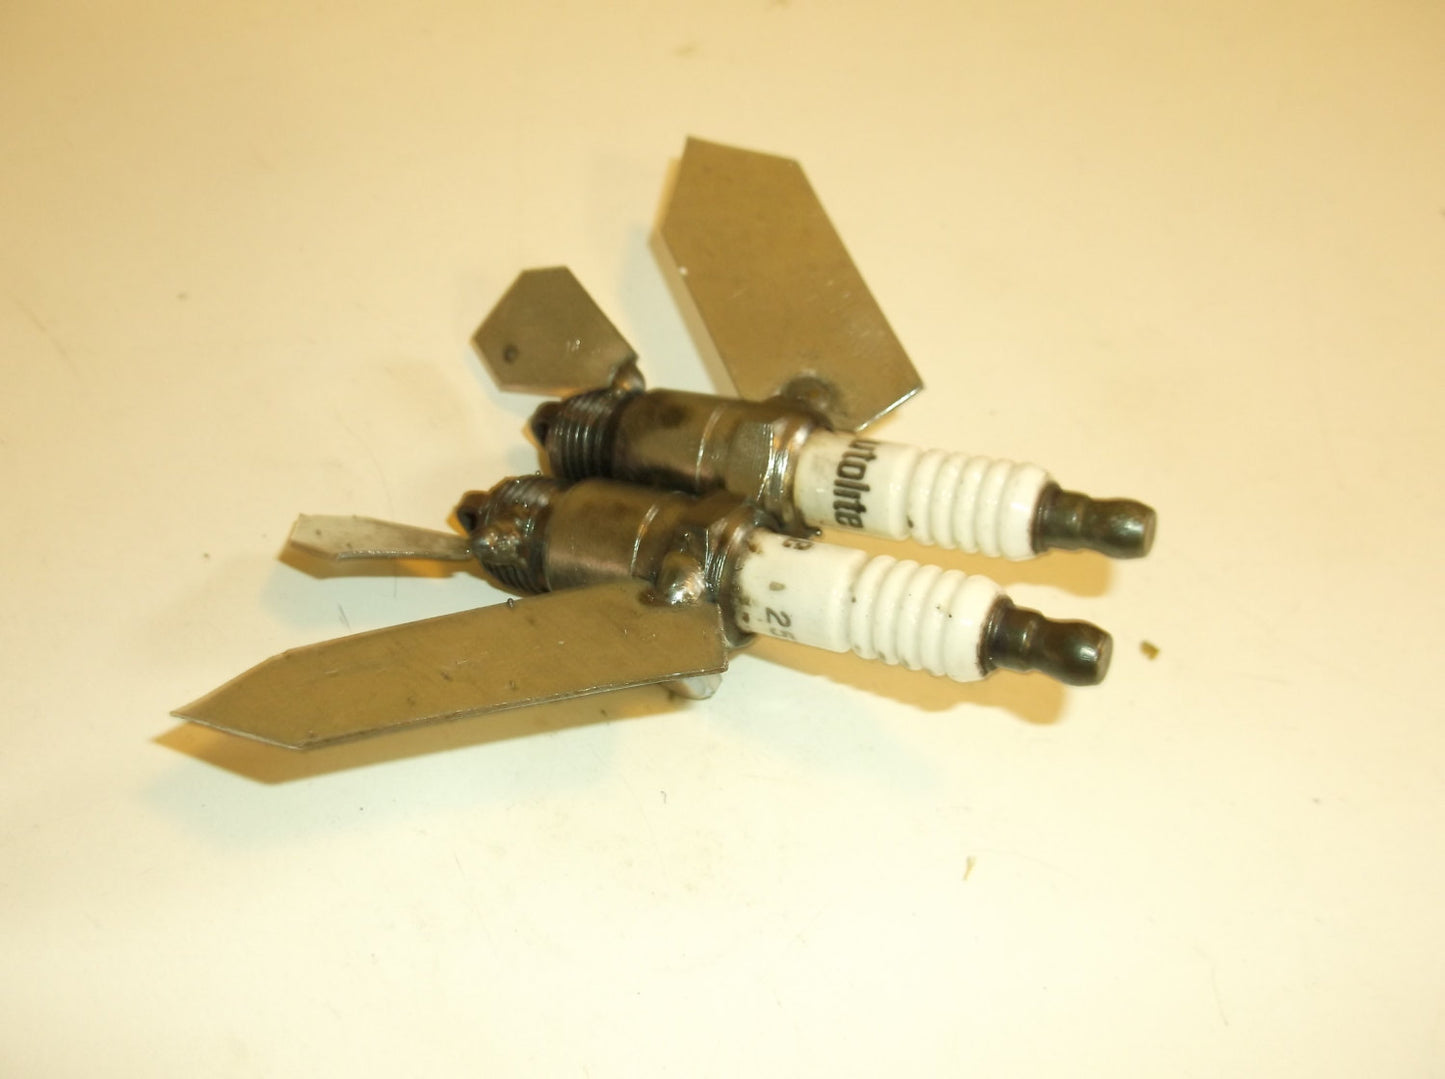 Twin Jet Airplane, Spark Plug Magnet, Metal Recycle Art